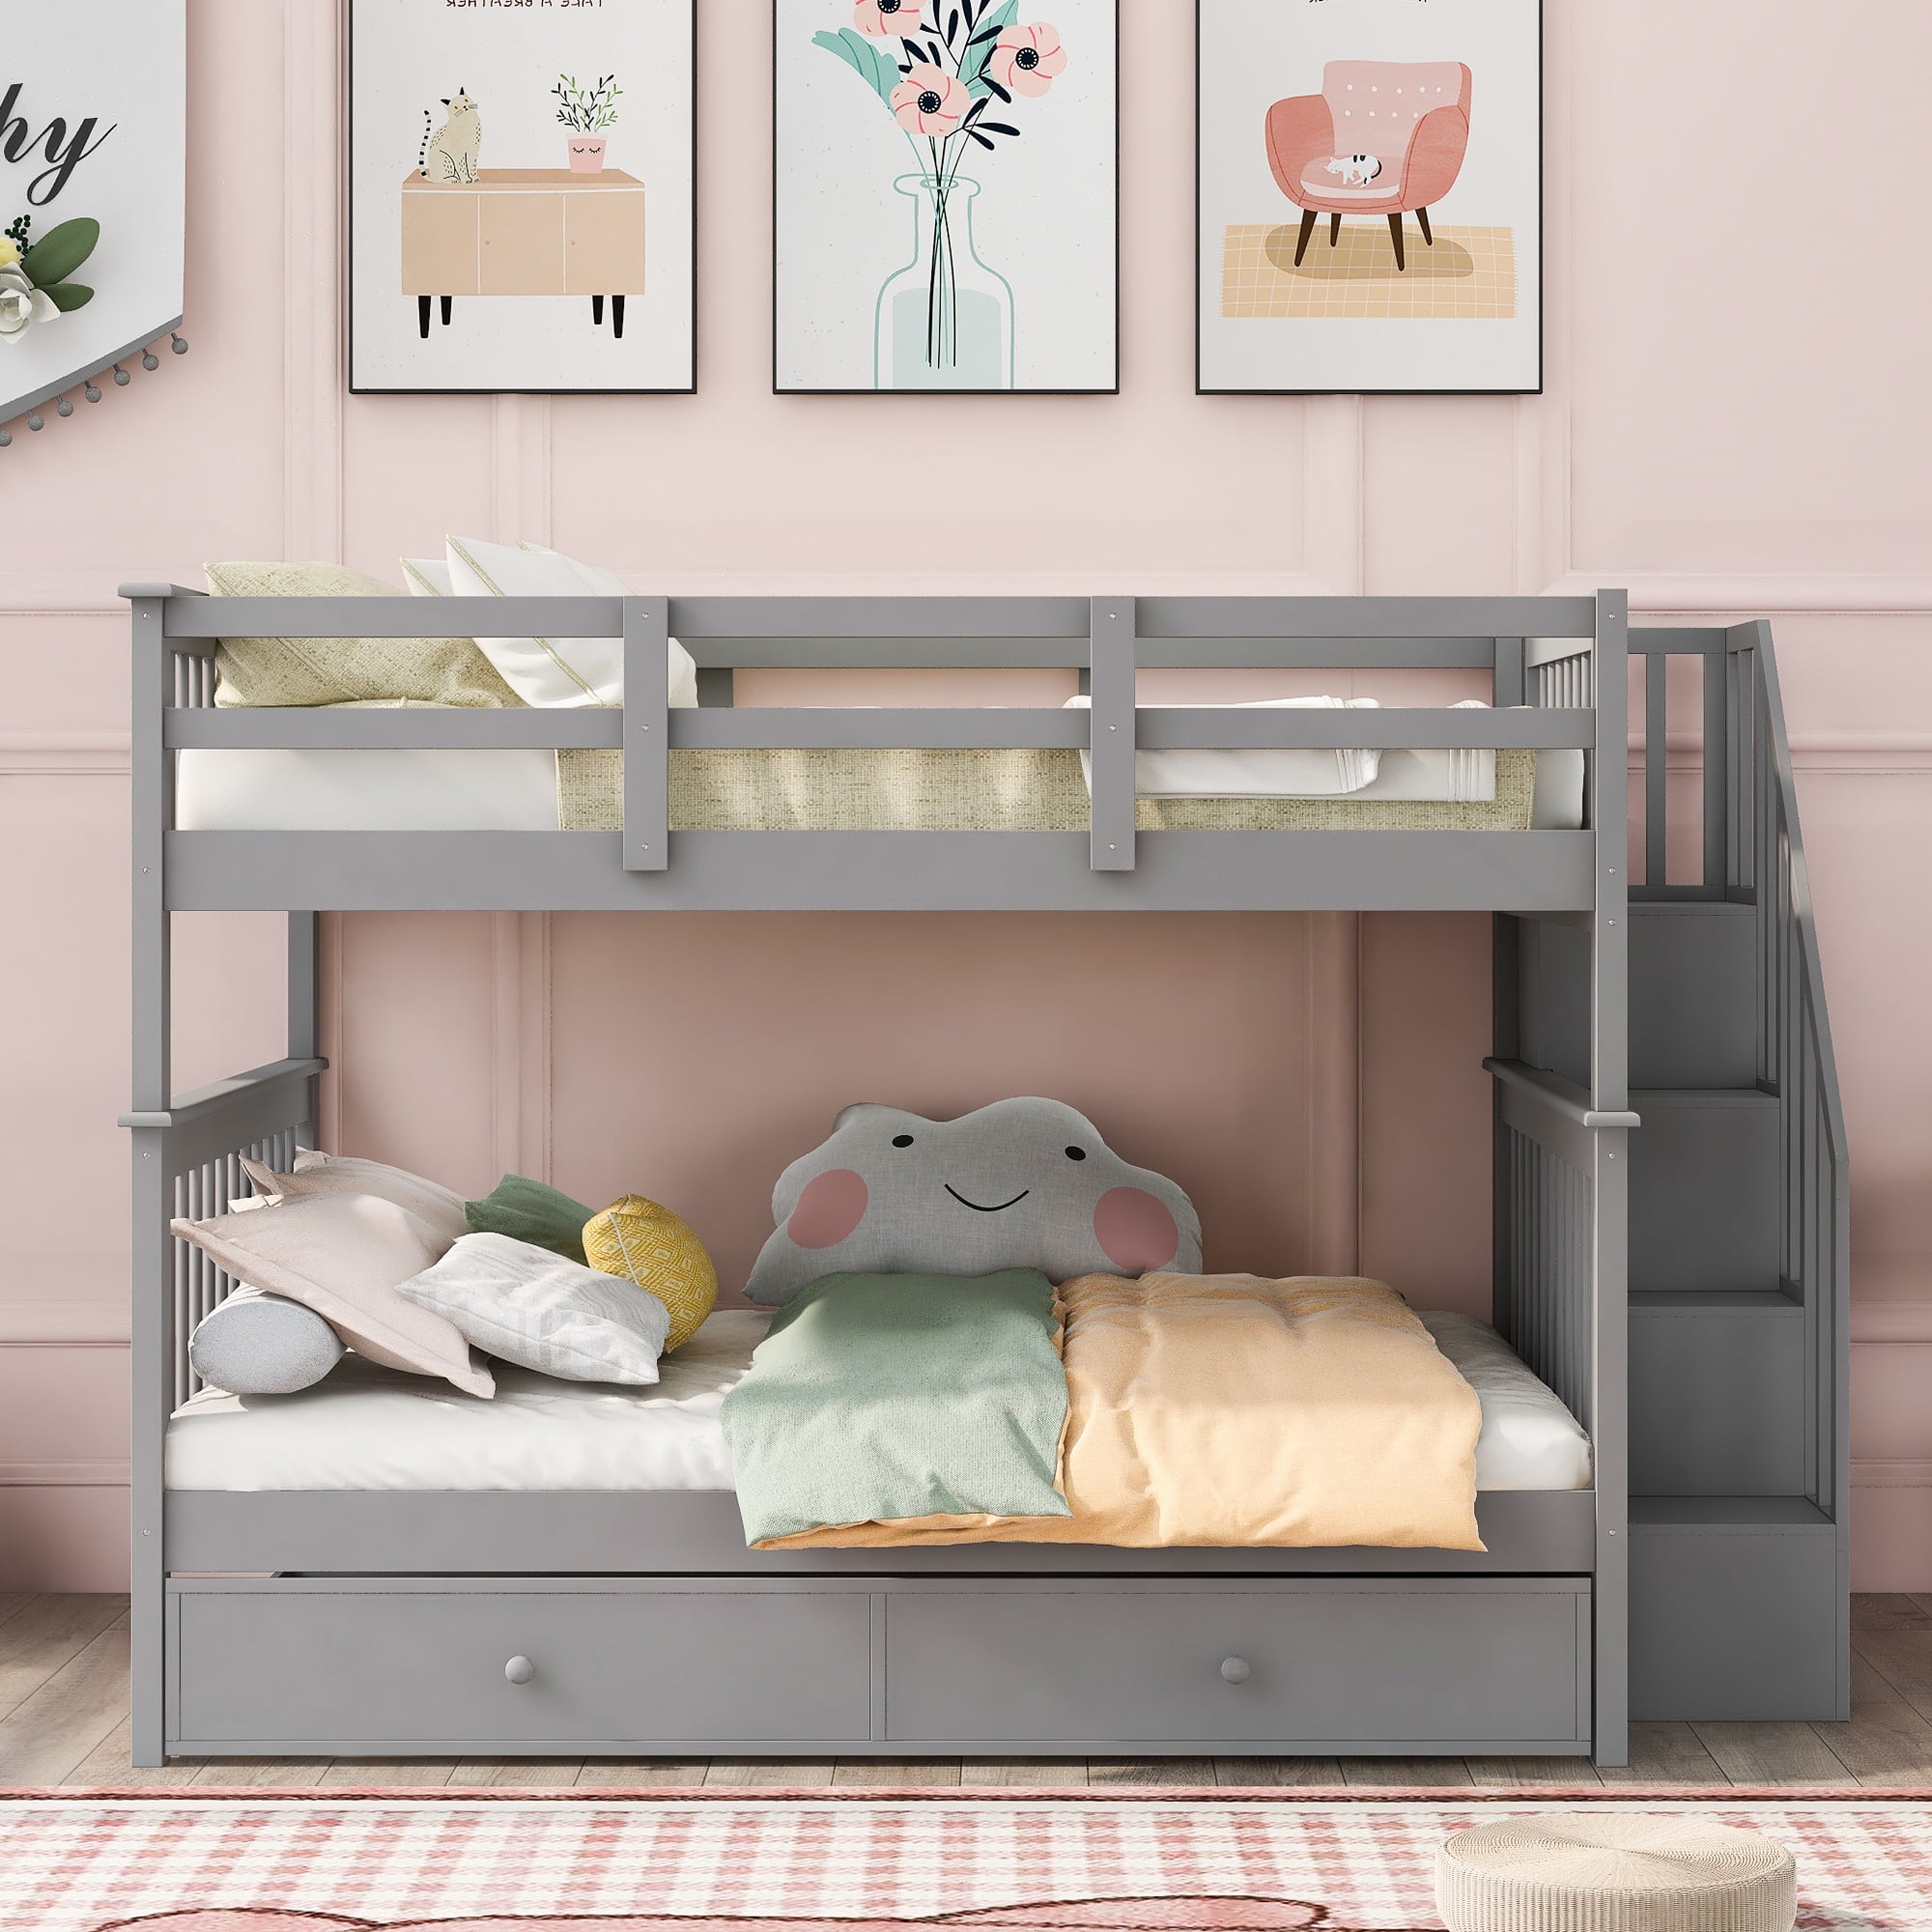 Sesslife Full Over Bunk Beds With, Dorm Room Bunk Bed Rails